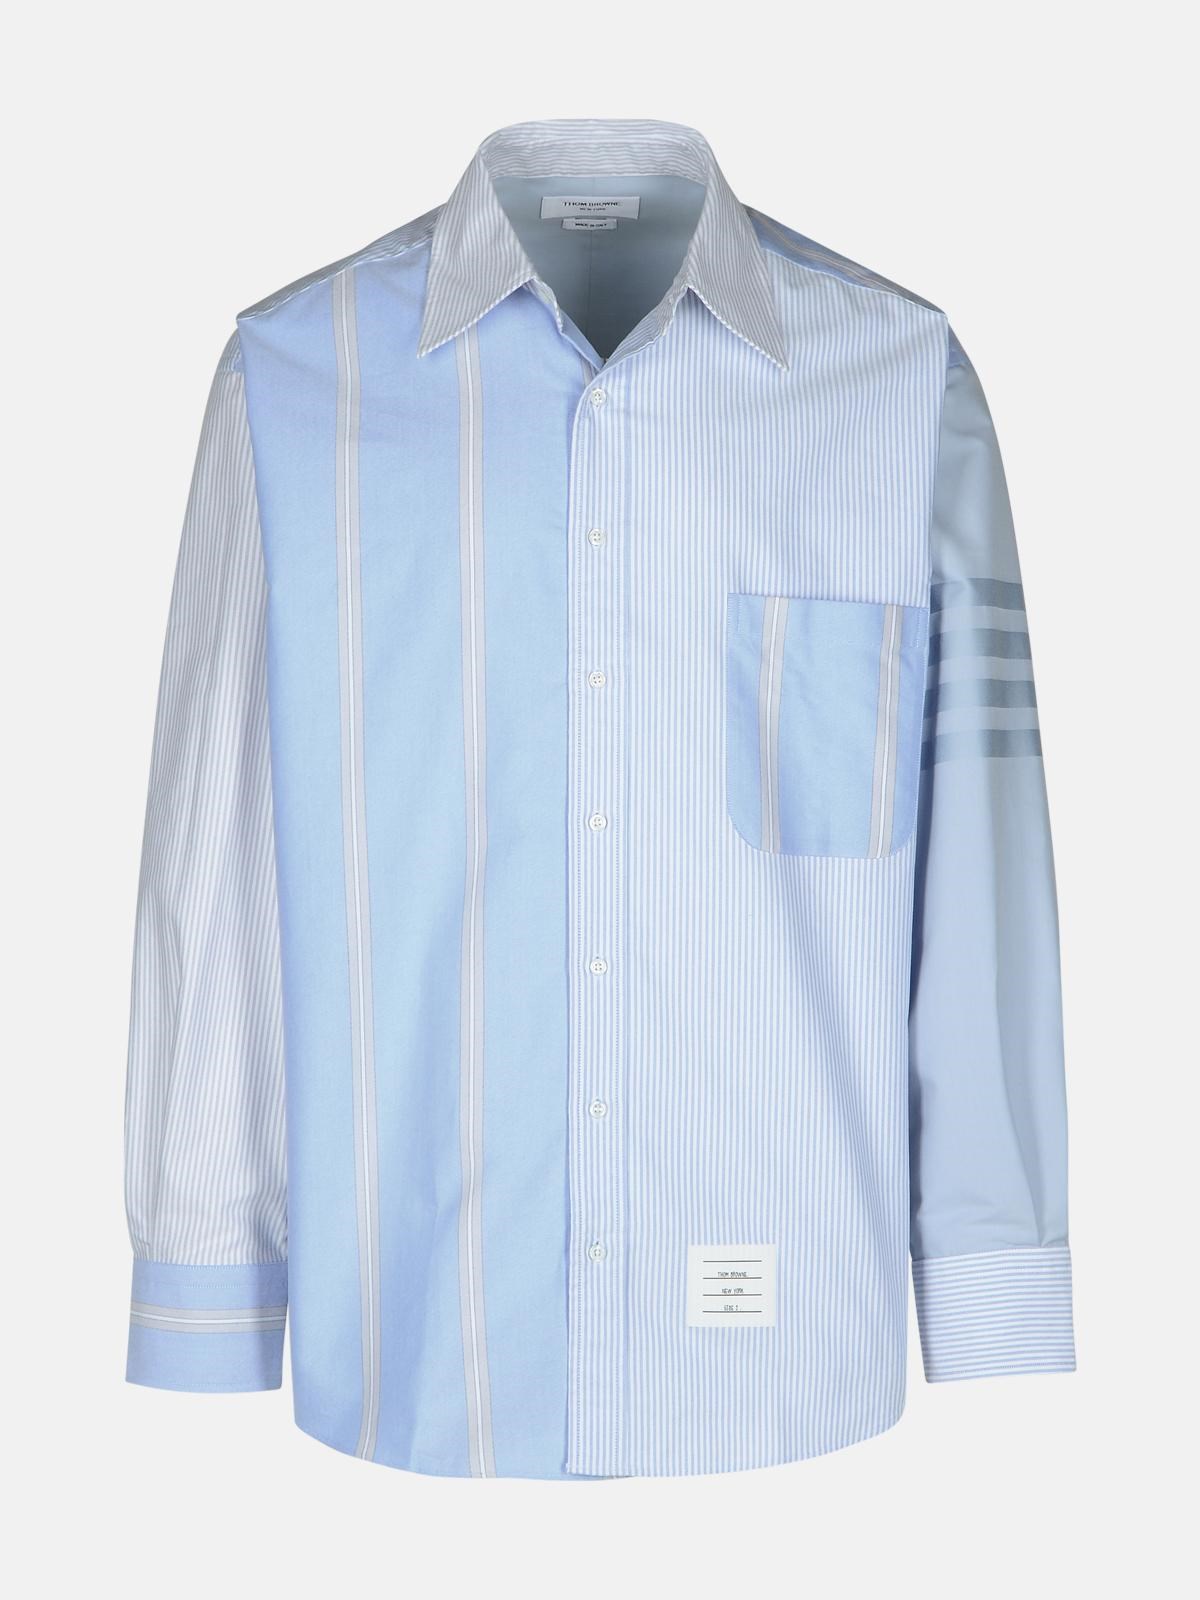 Thom Browne '4 Bar' Light Blue Cotton Shirt